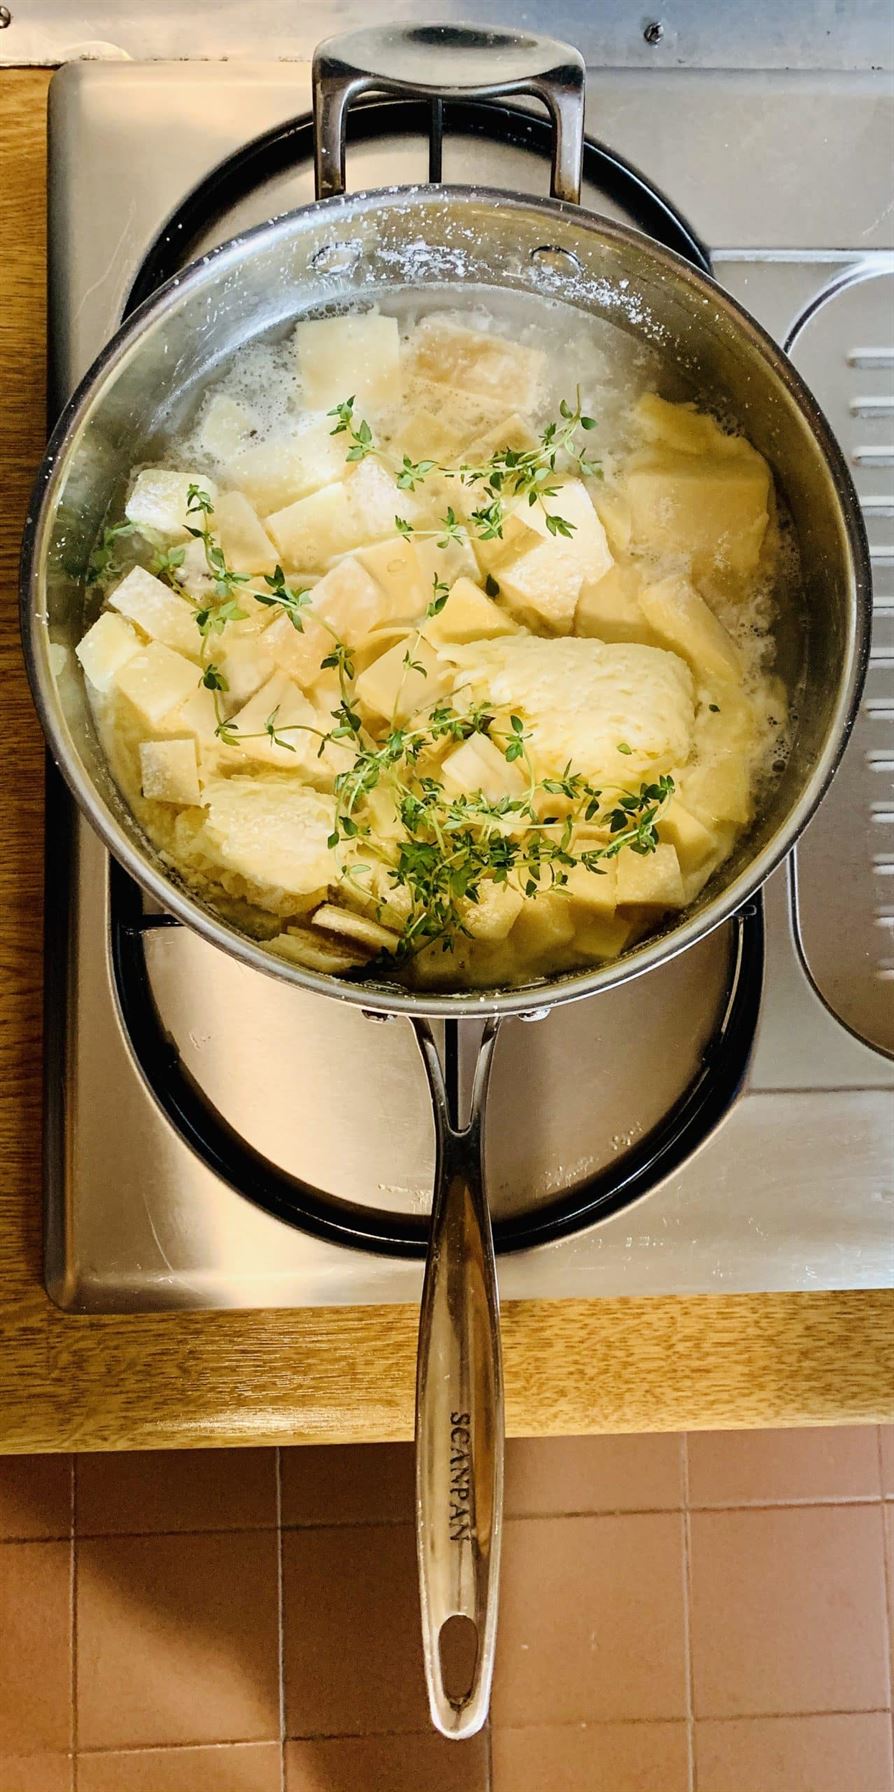 ChillaxBBQ Stay@Home Recipes #33 - Fried Short-Rib & Cheese Fondue